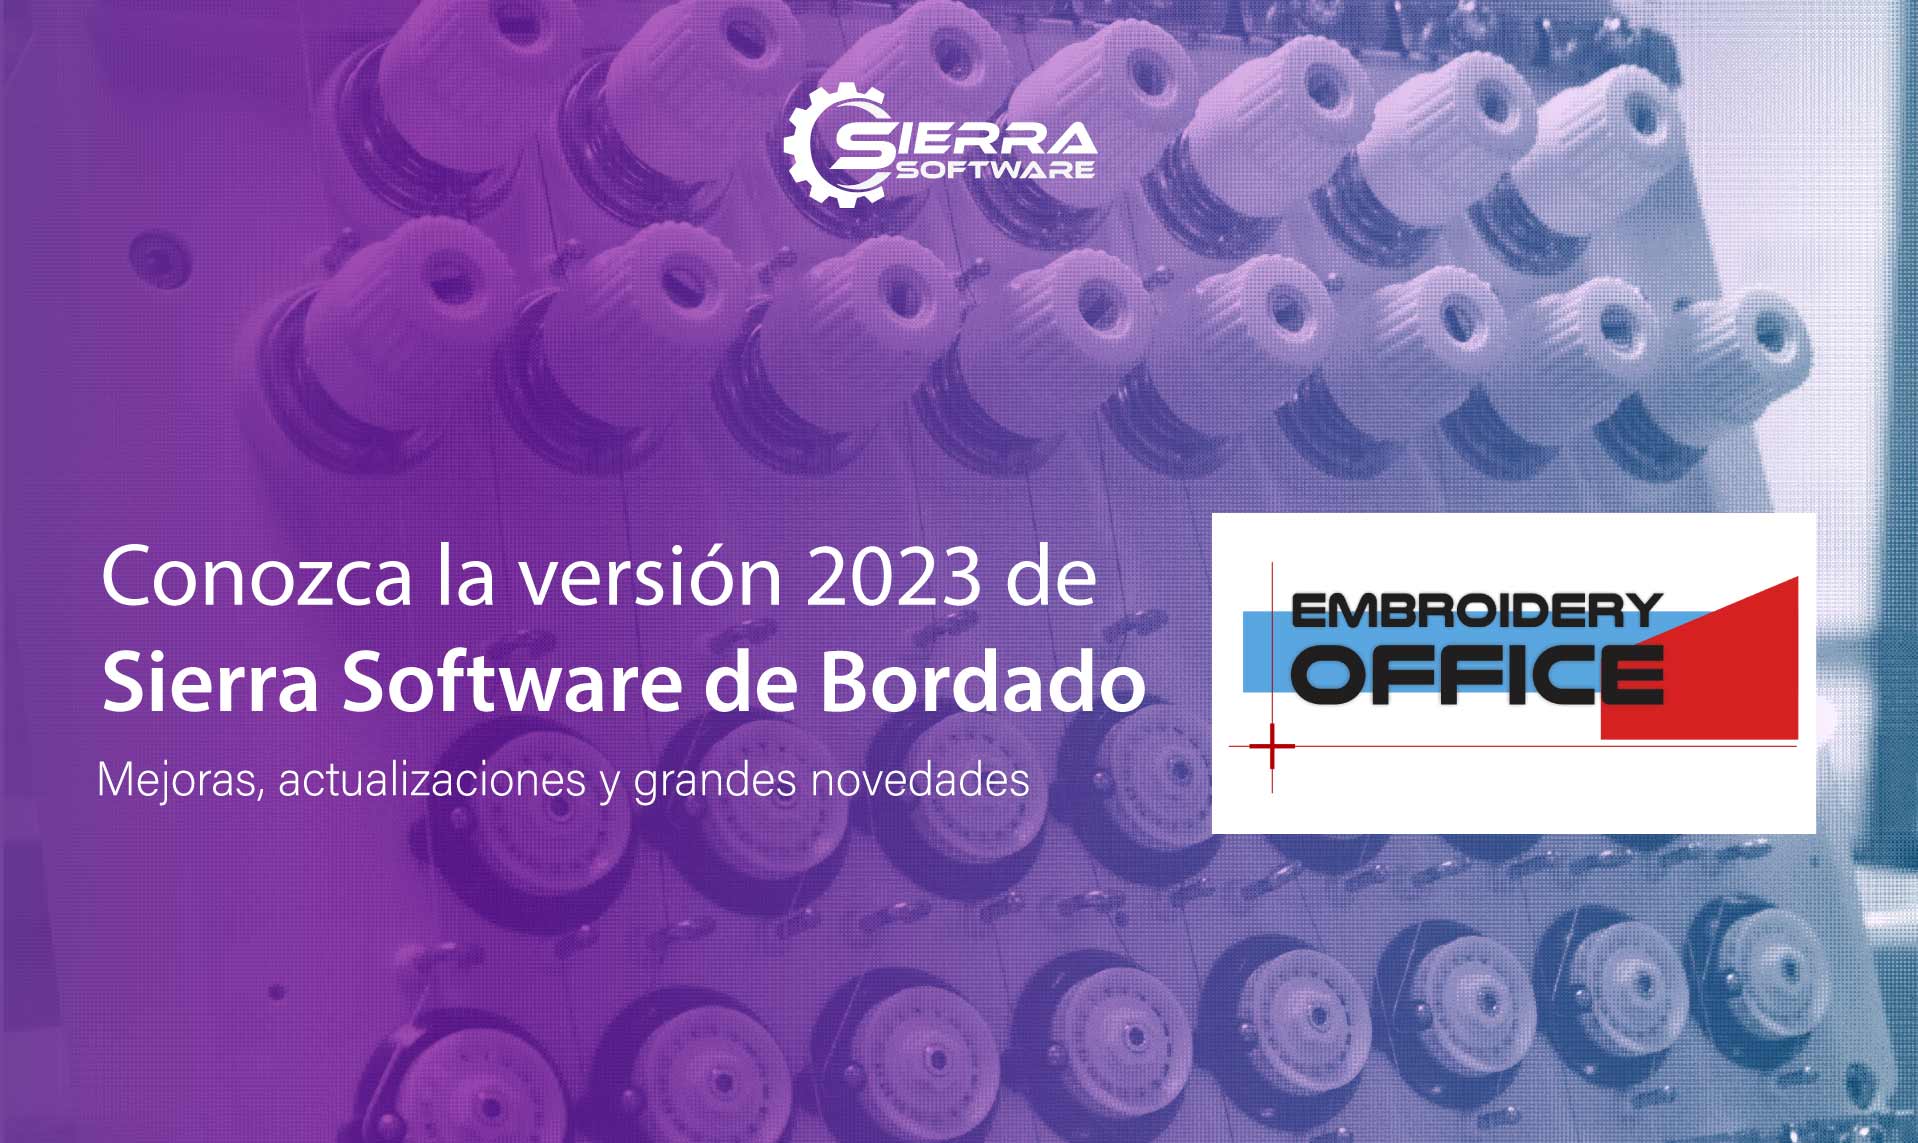 sierra software programa de bordado version 2023